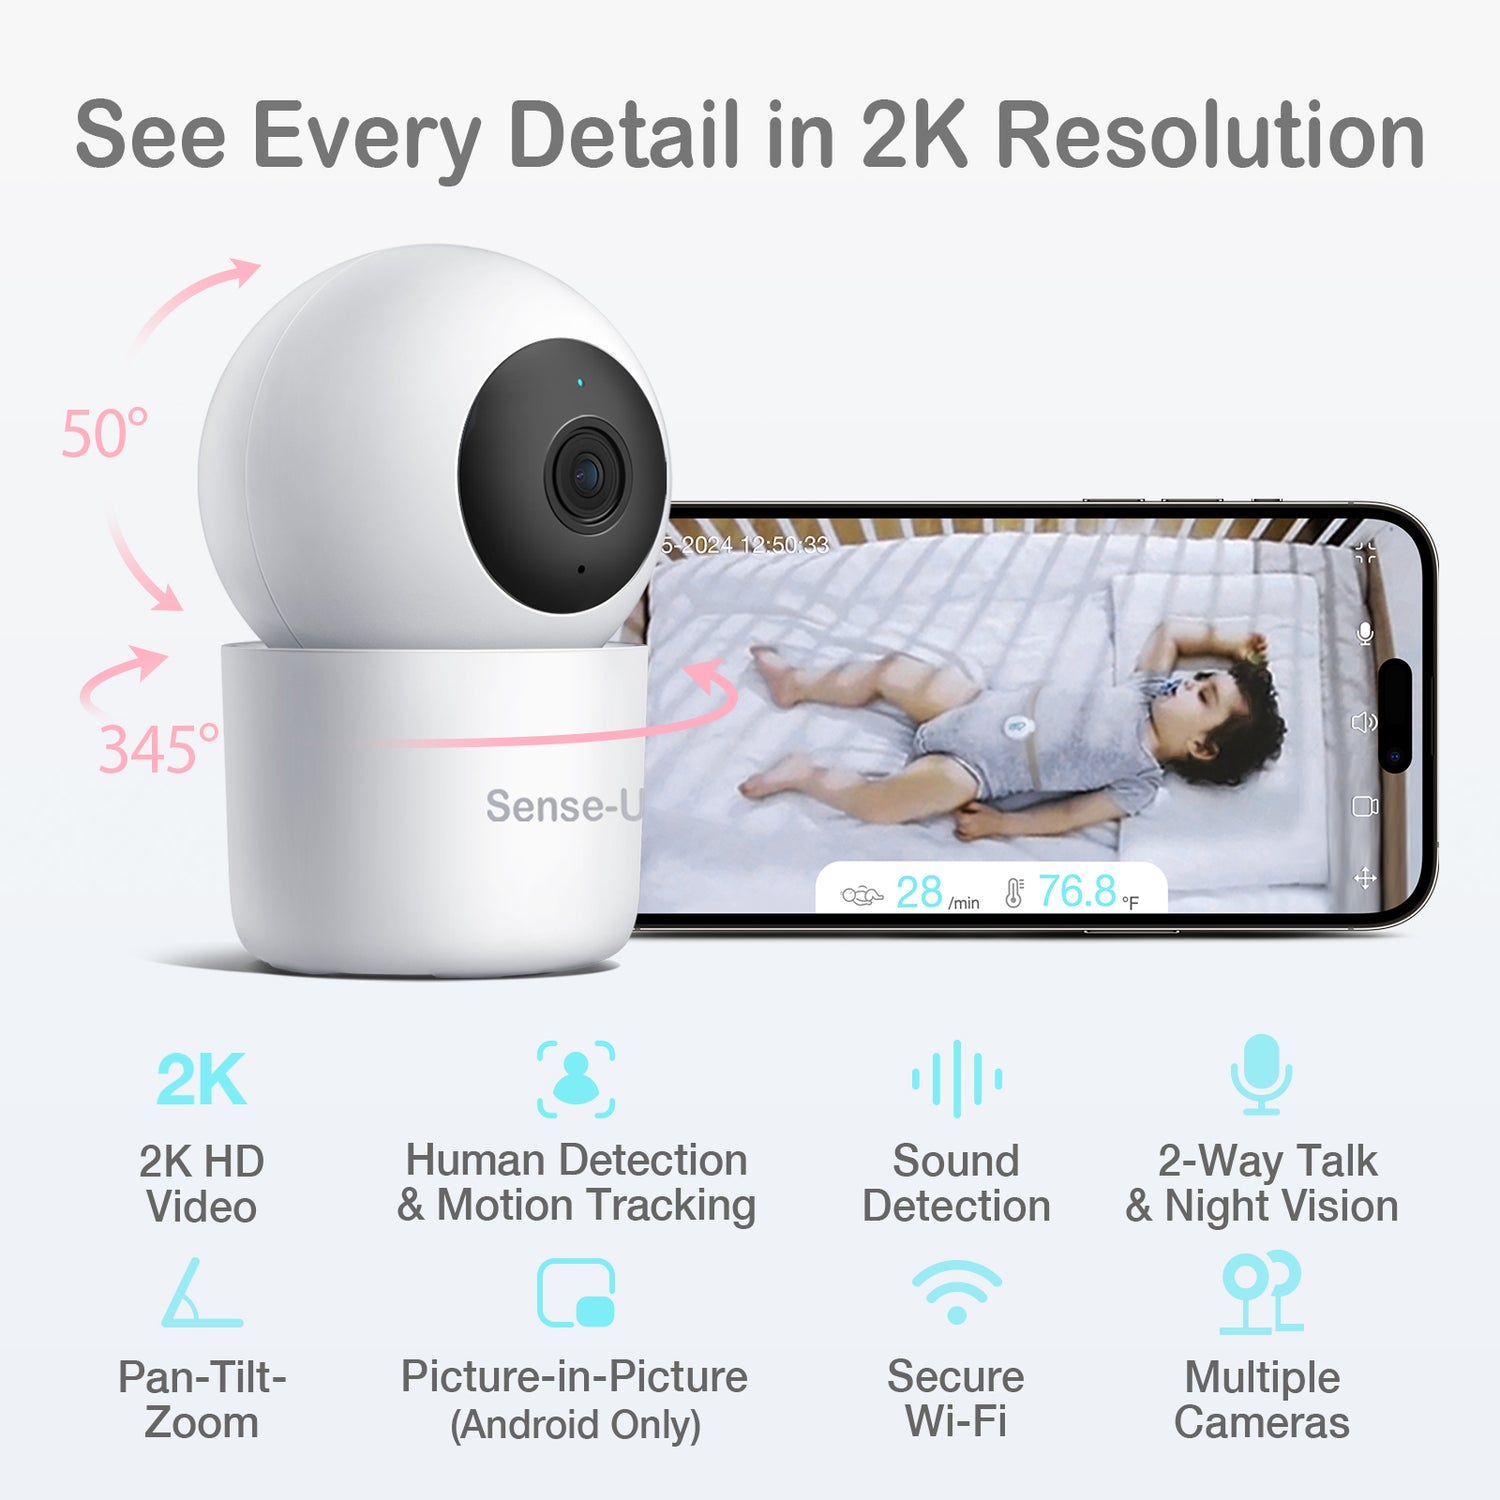 Monitor de bebé con cámara 360°